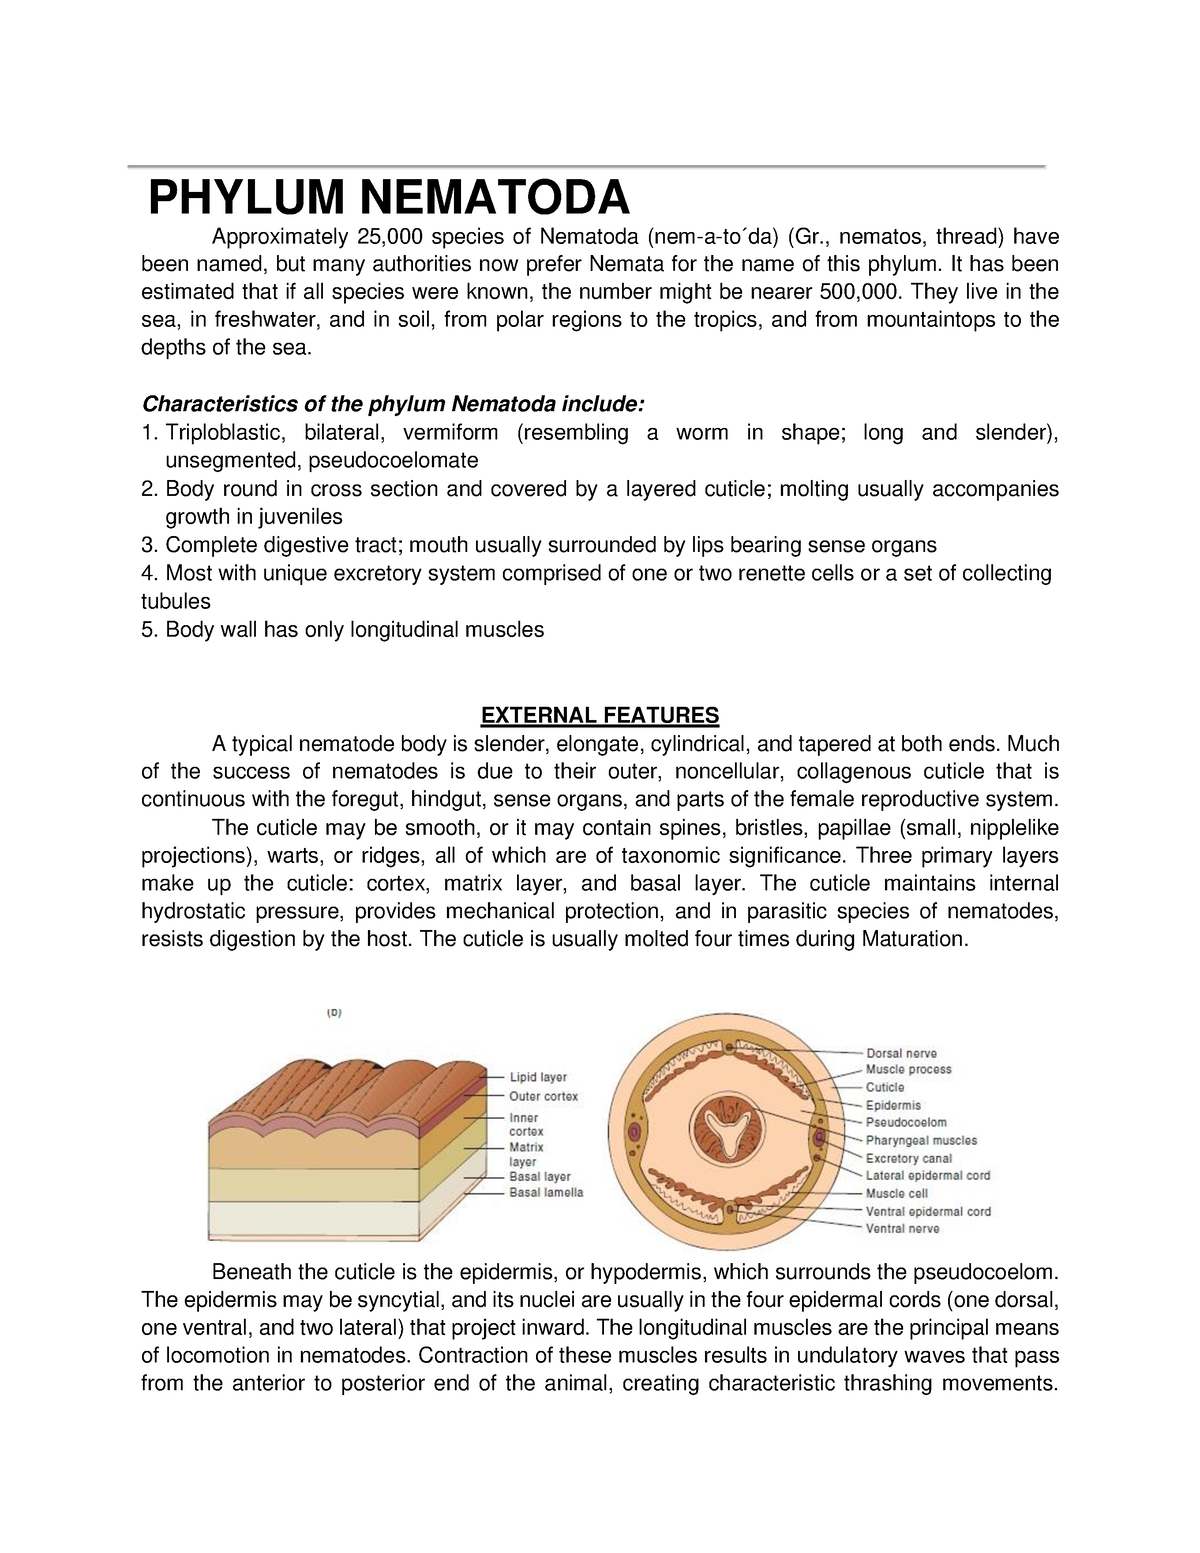 Nematoda - Excretory Systems